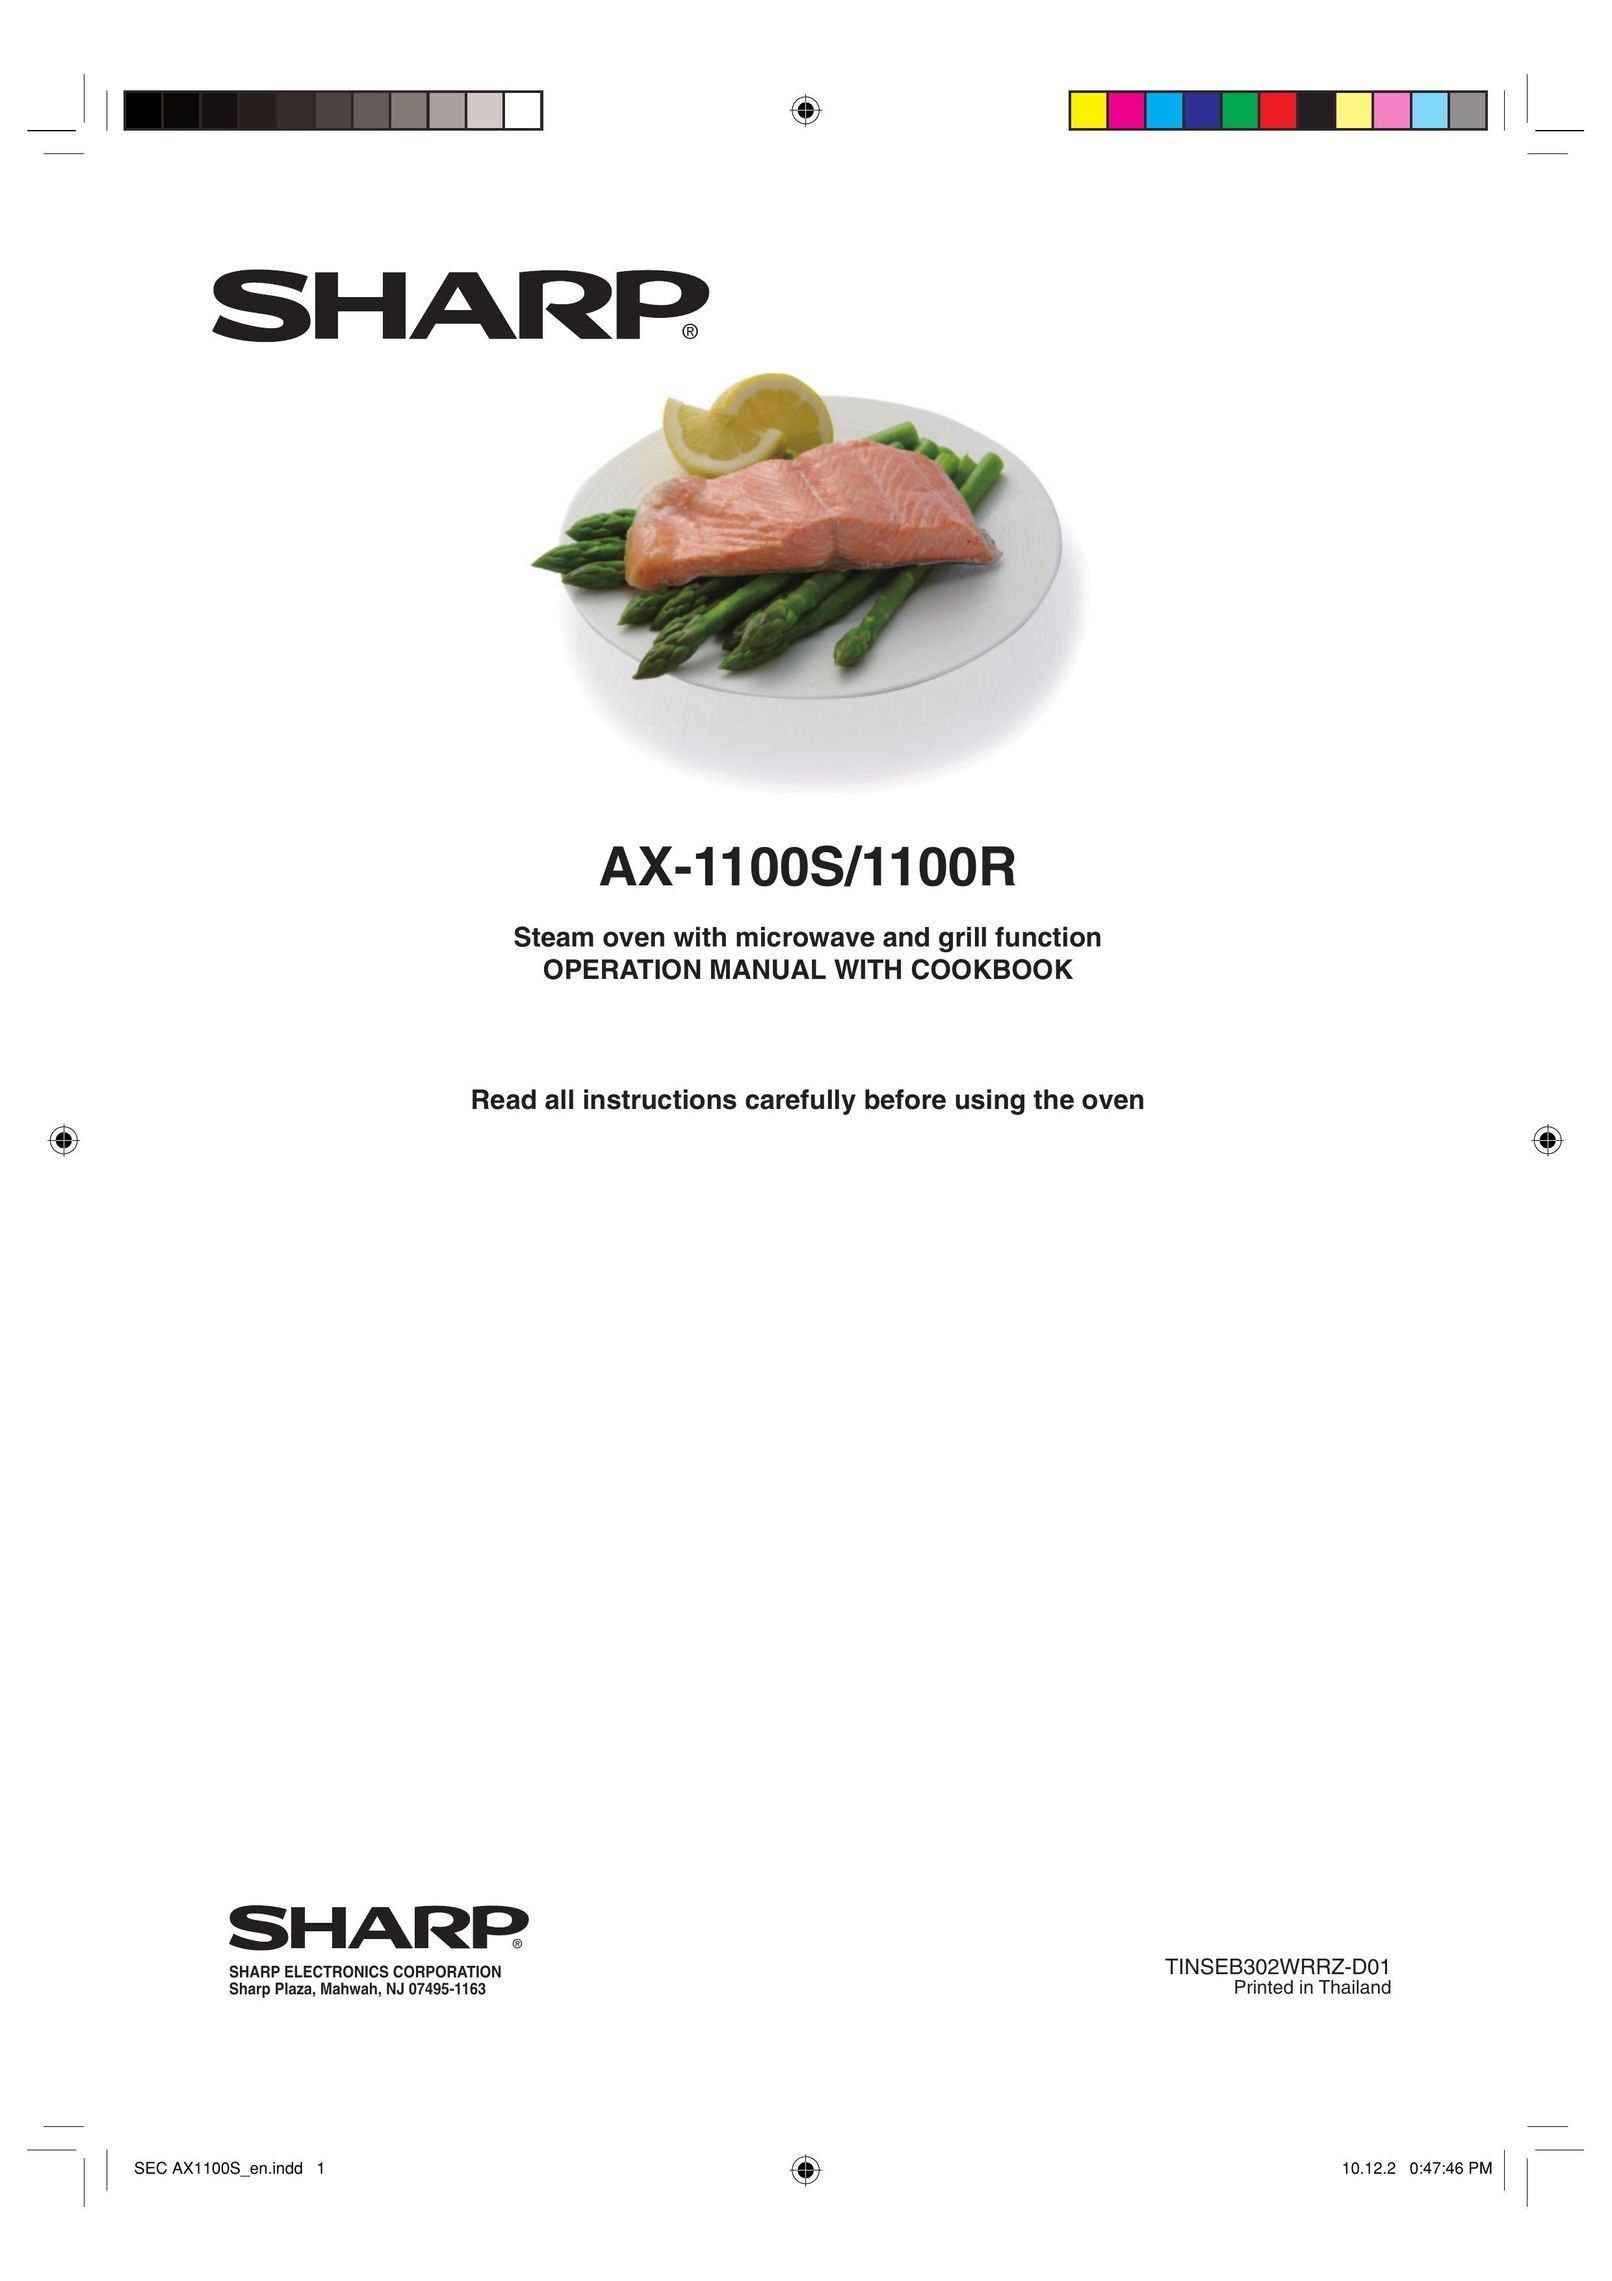 Sharp AX-1100S Oven User Manual